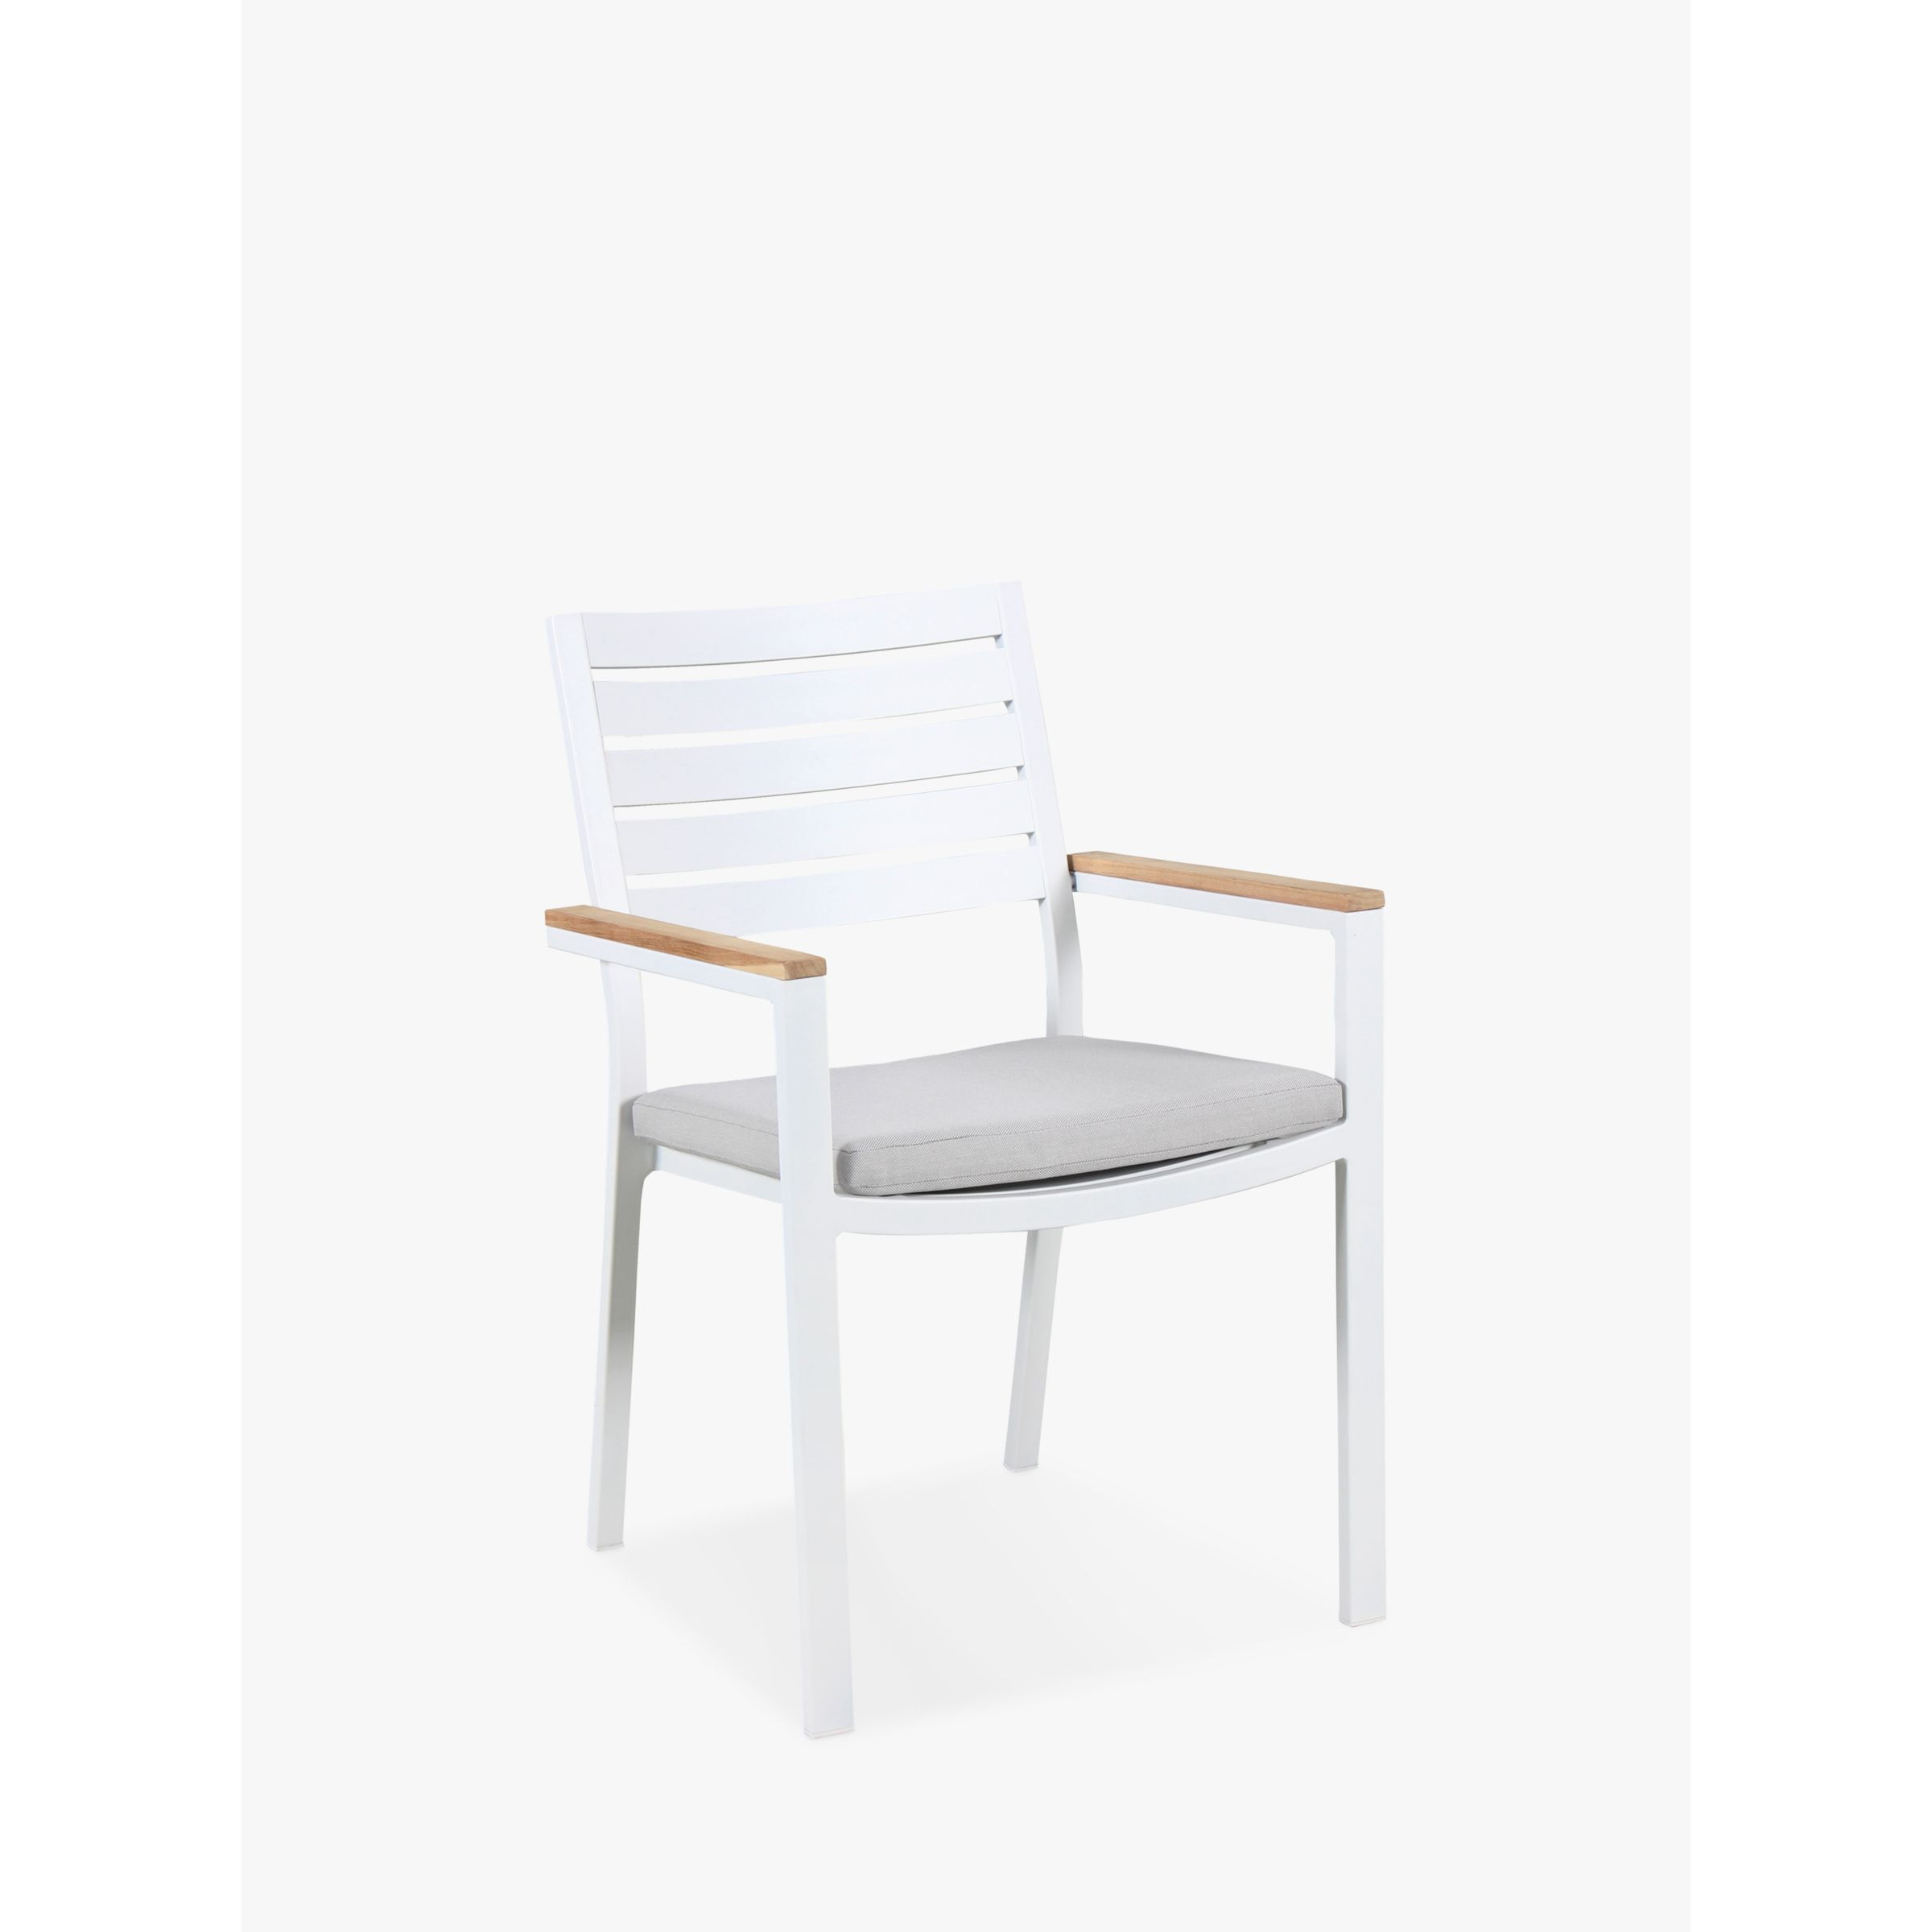 KETTLER Elba Garden Dining Chair, FSC-Certified (Teak Wood) - image 1